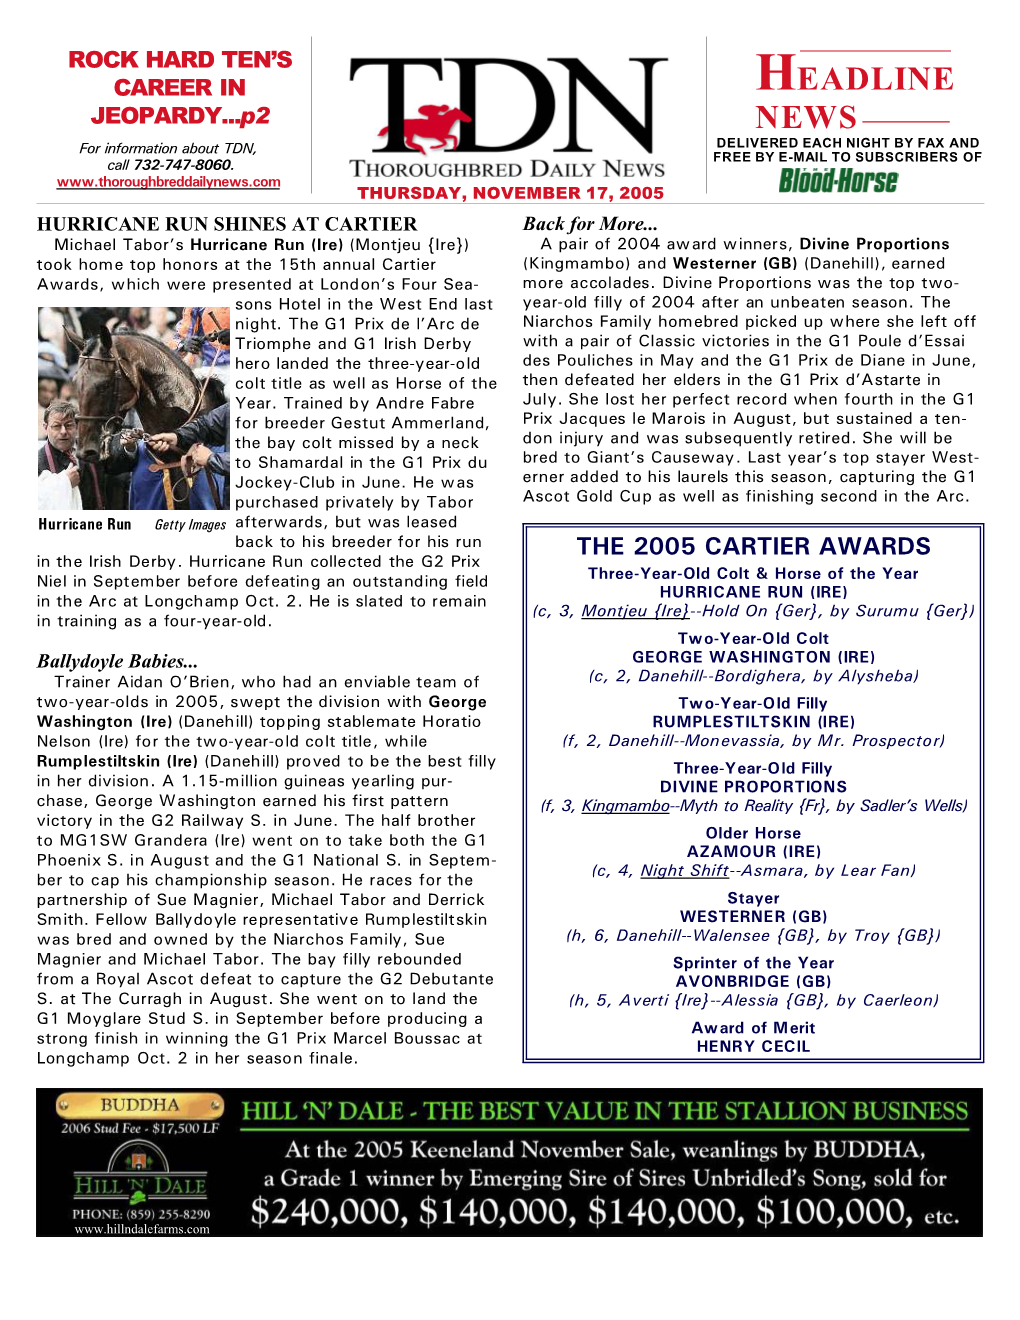 HEADLINE NEWS • 11/17/05 • PAGE 2 of 2